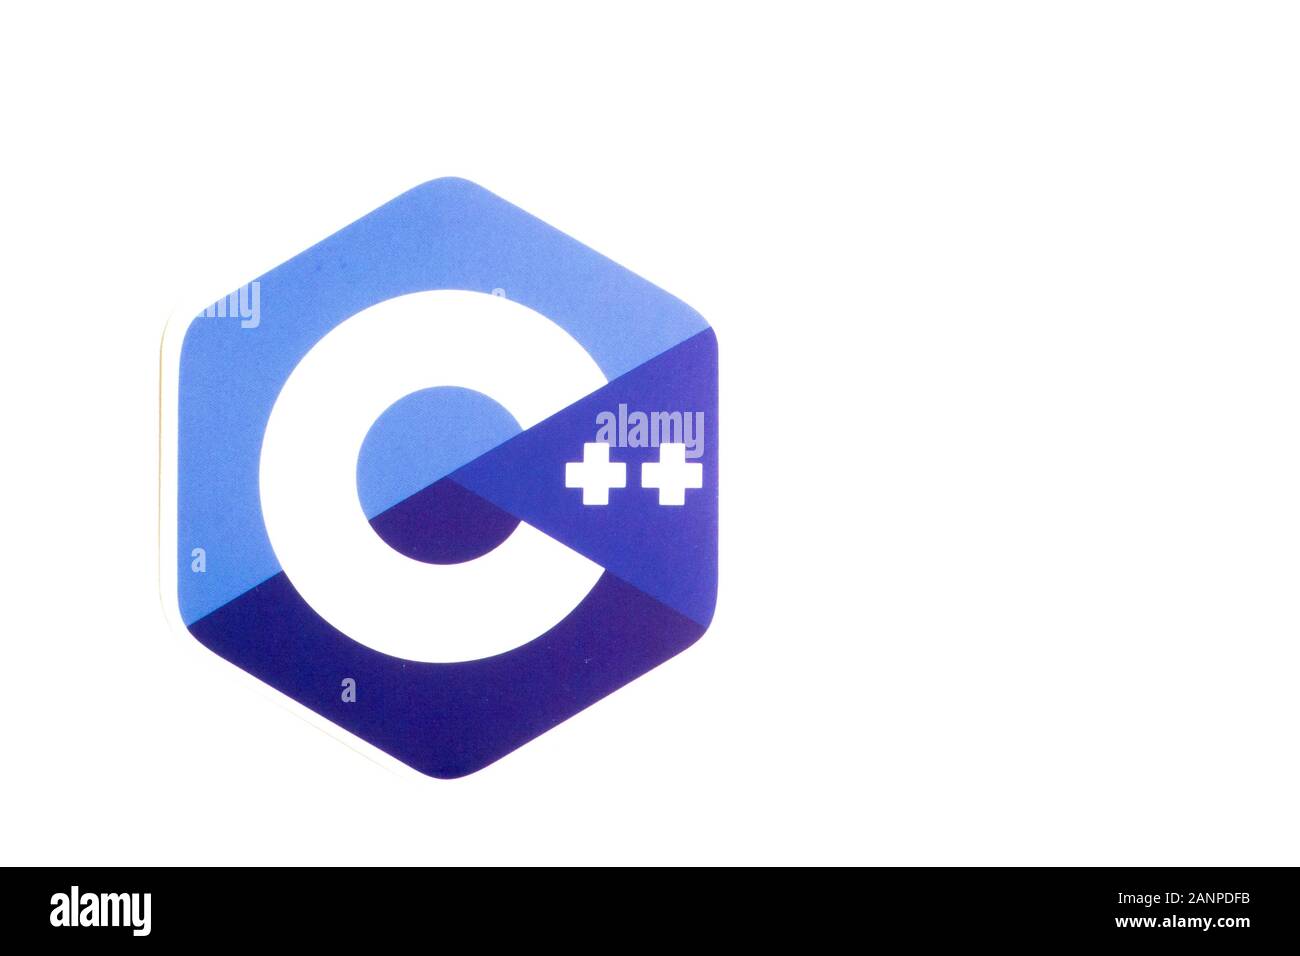 Los Angeles, California, USA - 17 January 2020: C++ logo with copy space, Illustrative Editorial Stock Photo